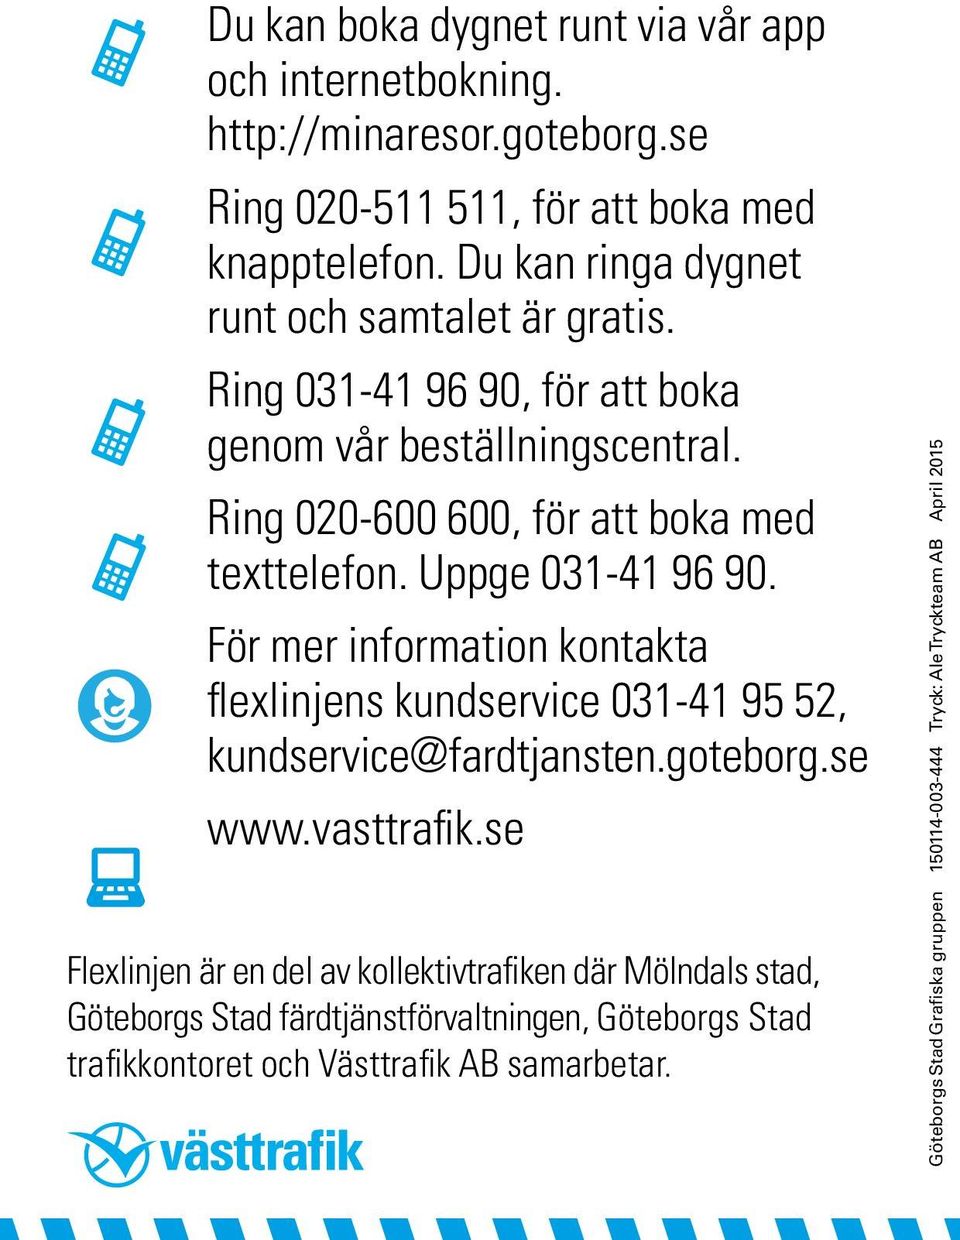 Uppge 031-41 96 90. För mer information kontakta flexlinjens kundservice 031-41 95 52, kundservice@fardtjansten.goteborg.se www.vasttrafik.